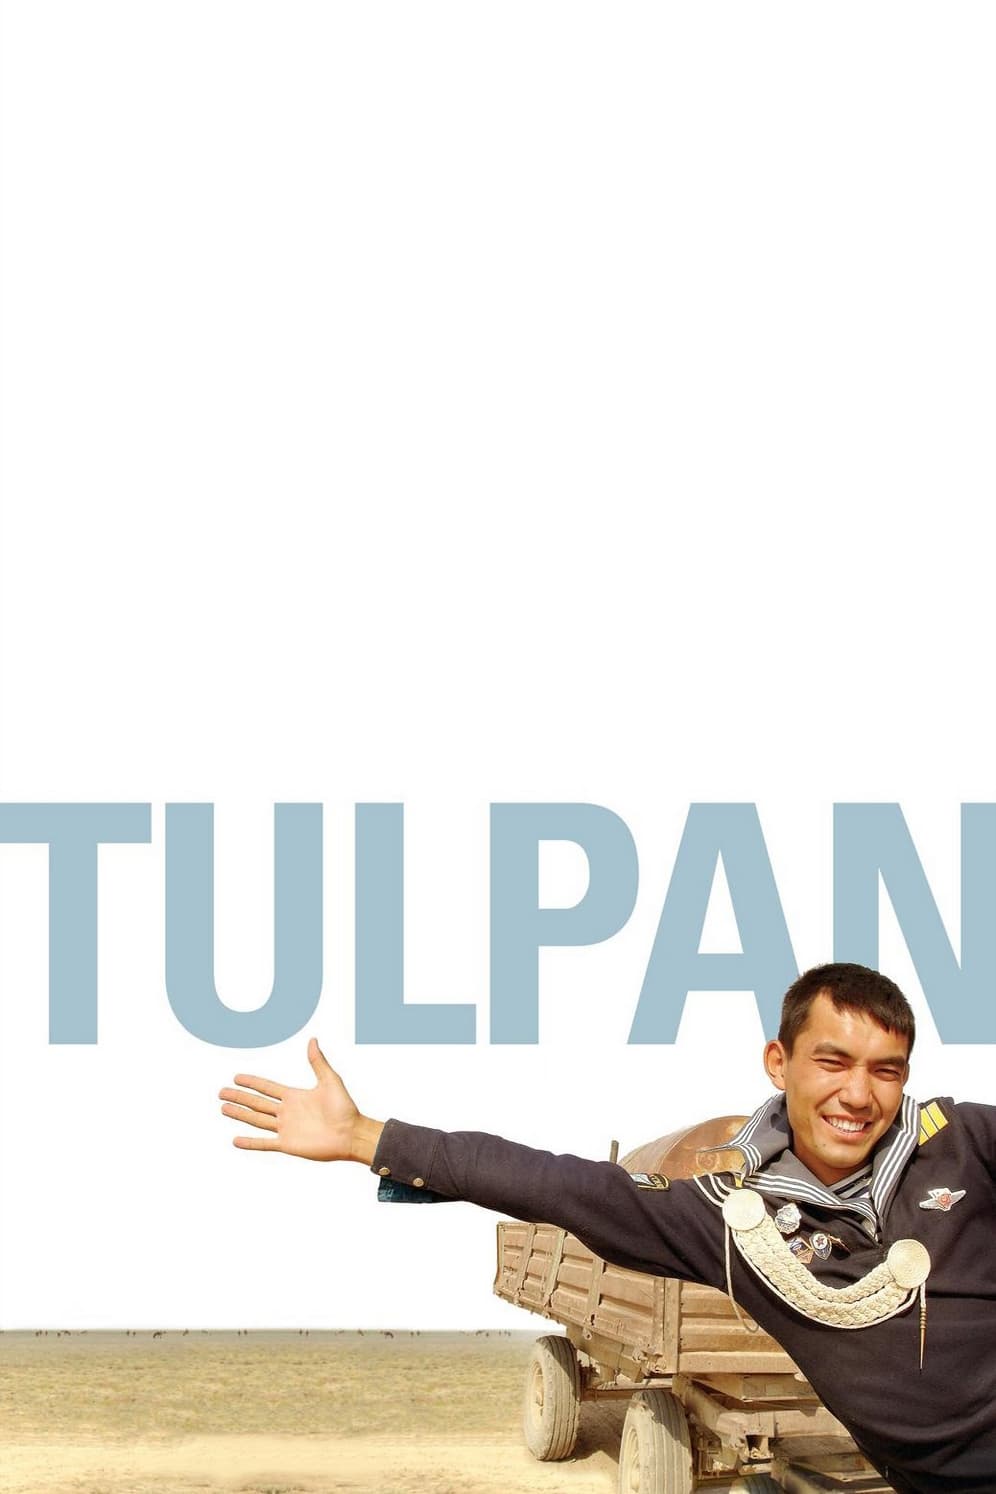 Tulpan (2009)